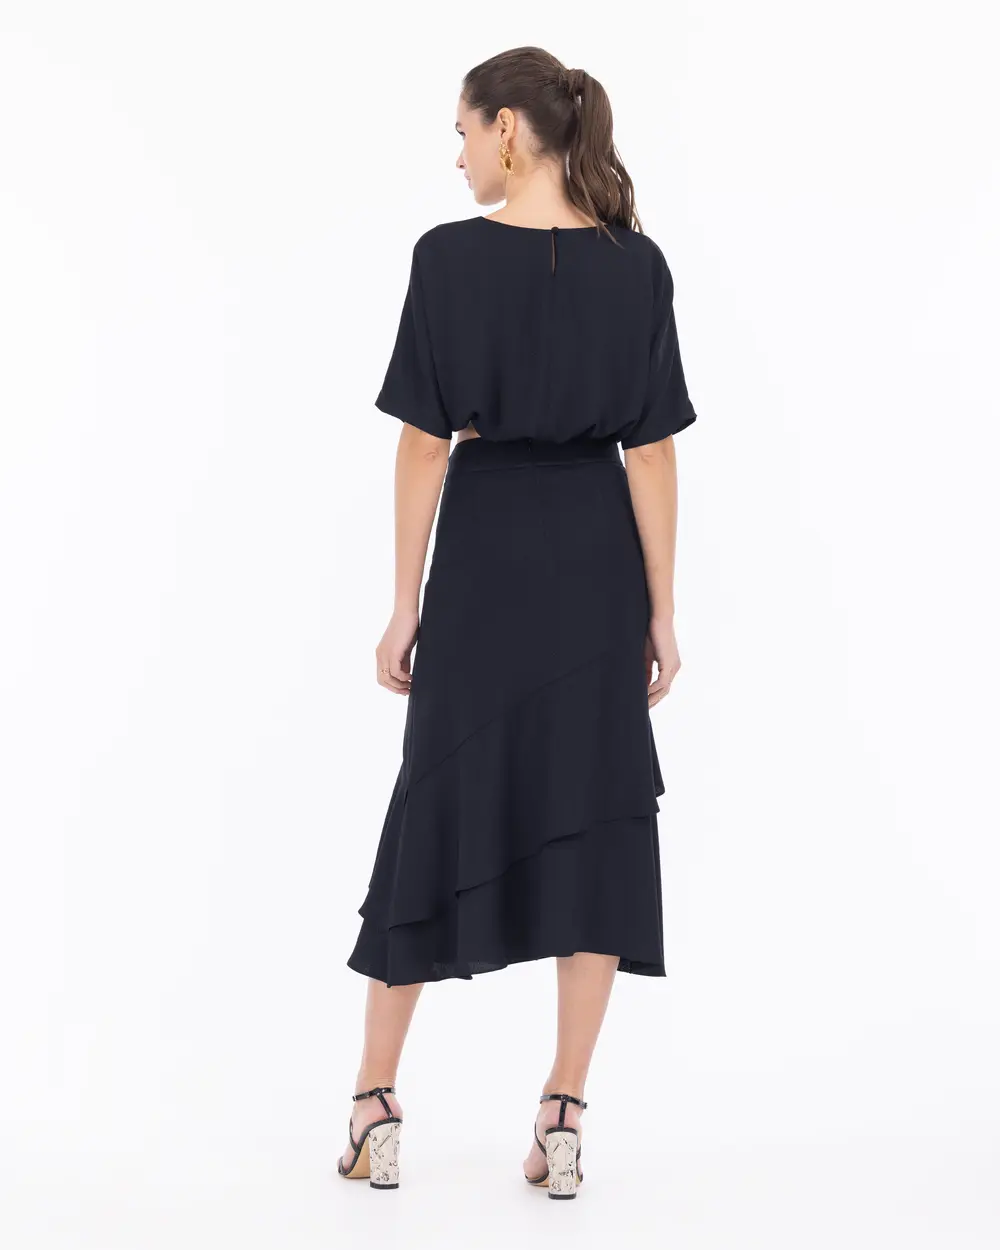 Satin Woven Layered Midi Length Elegant Skirt